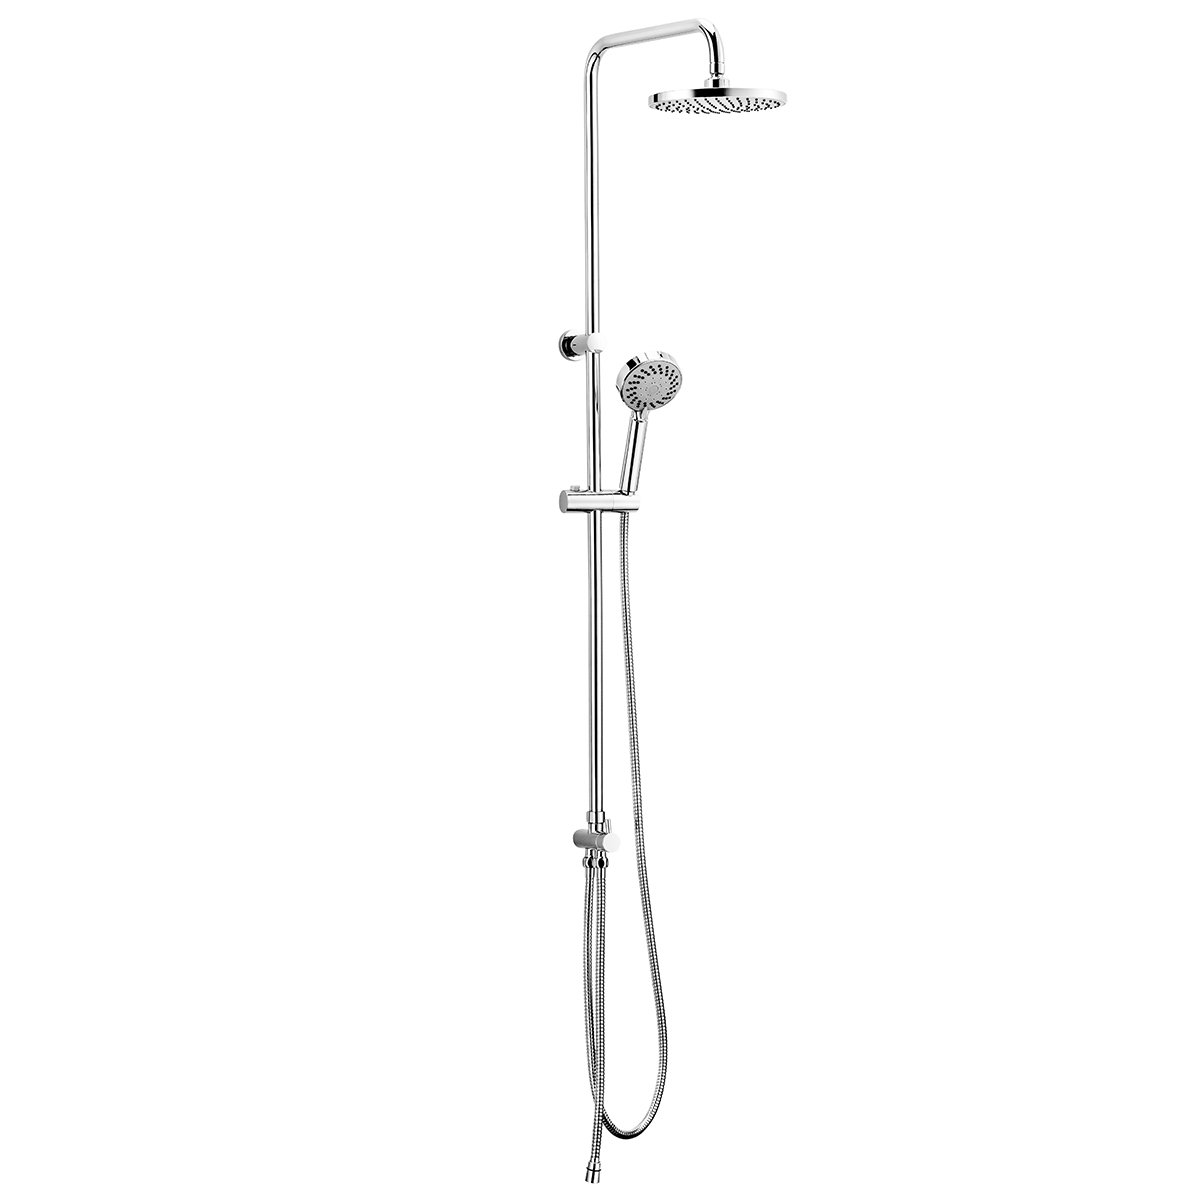 Factory made hot-sale Bathroom Cabinet With Sink - Bath shower bar F2101 shower column – Sinyu detail pictures